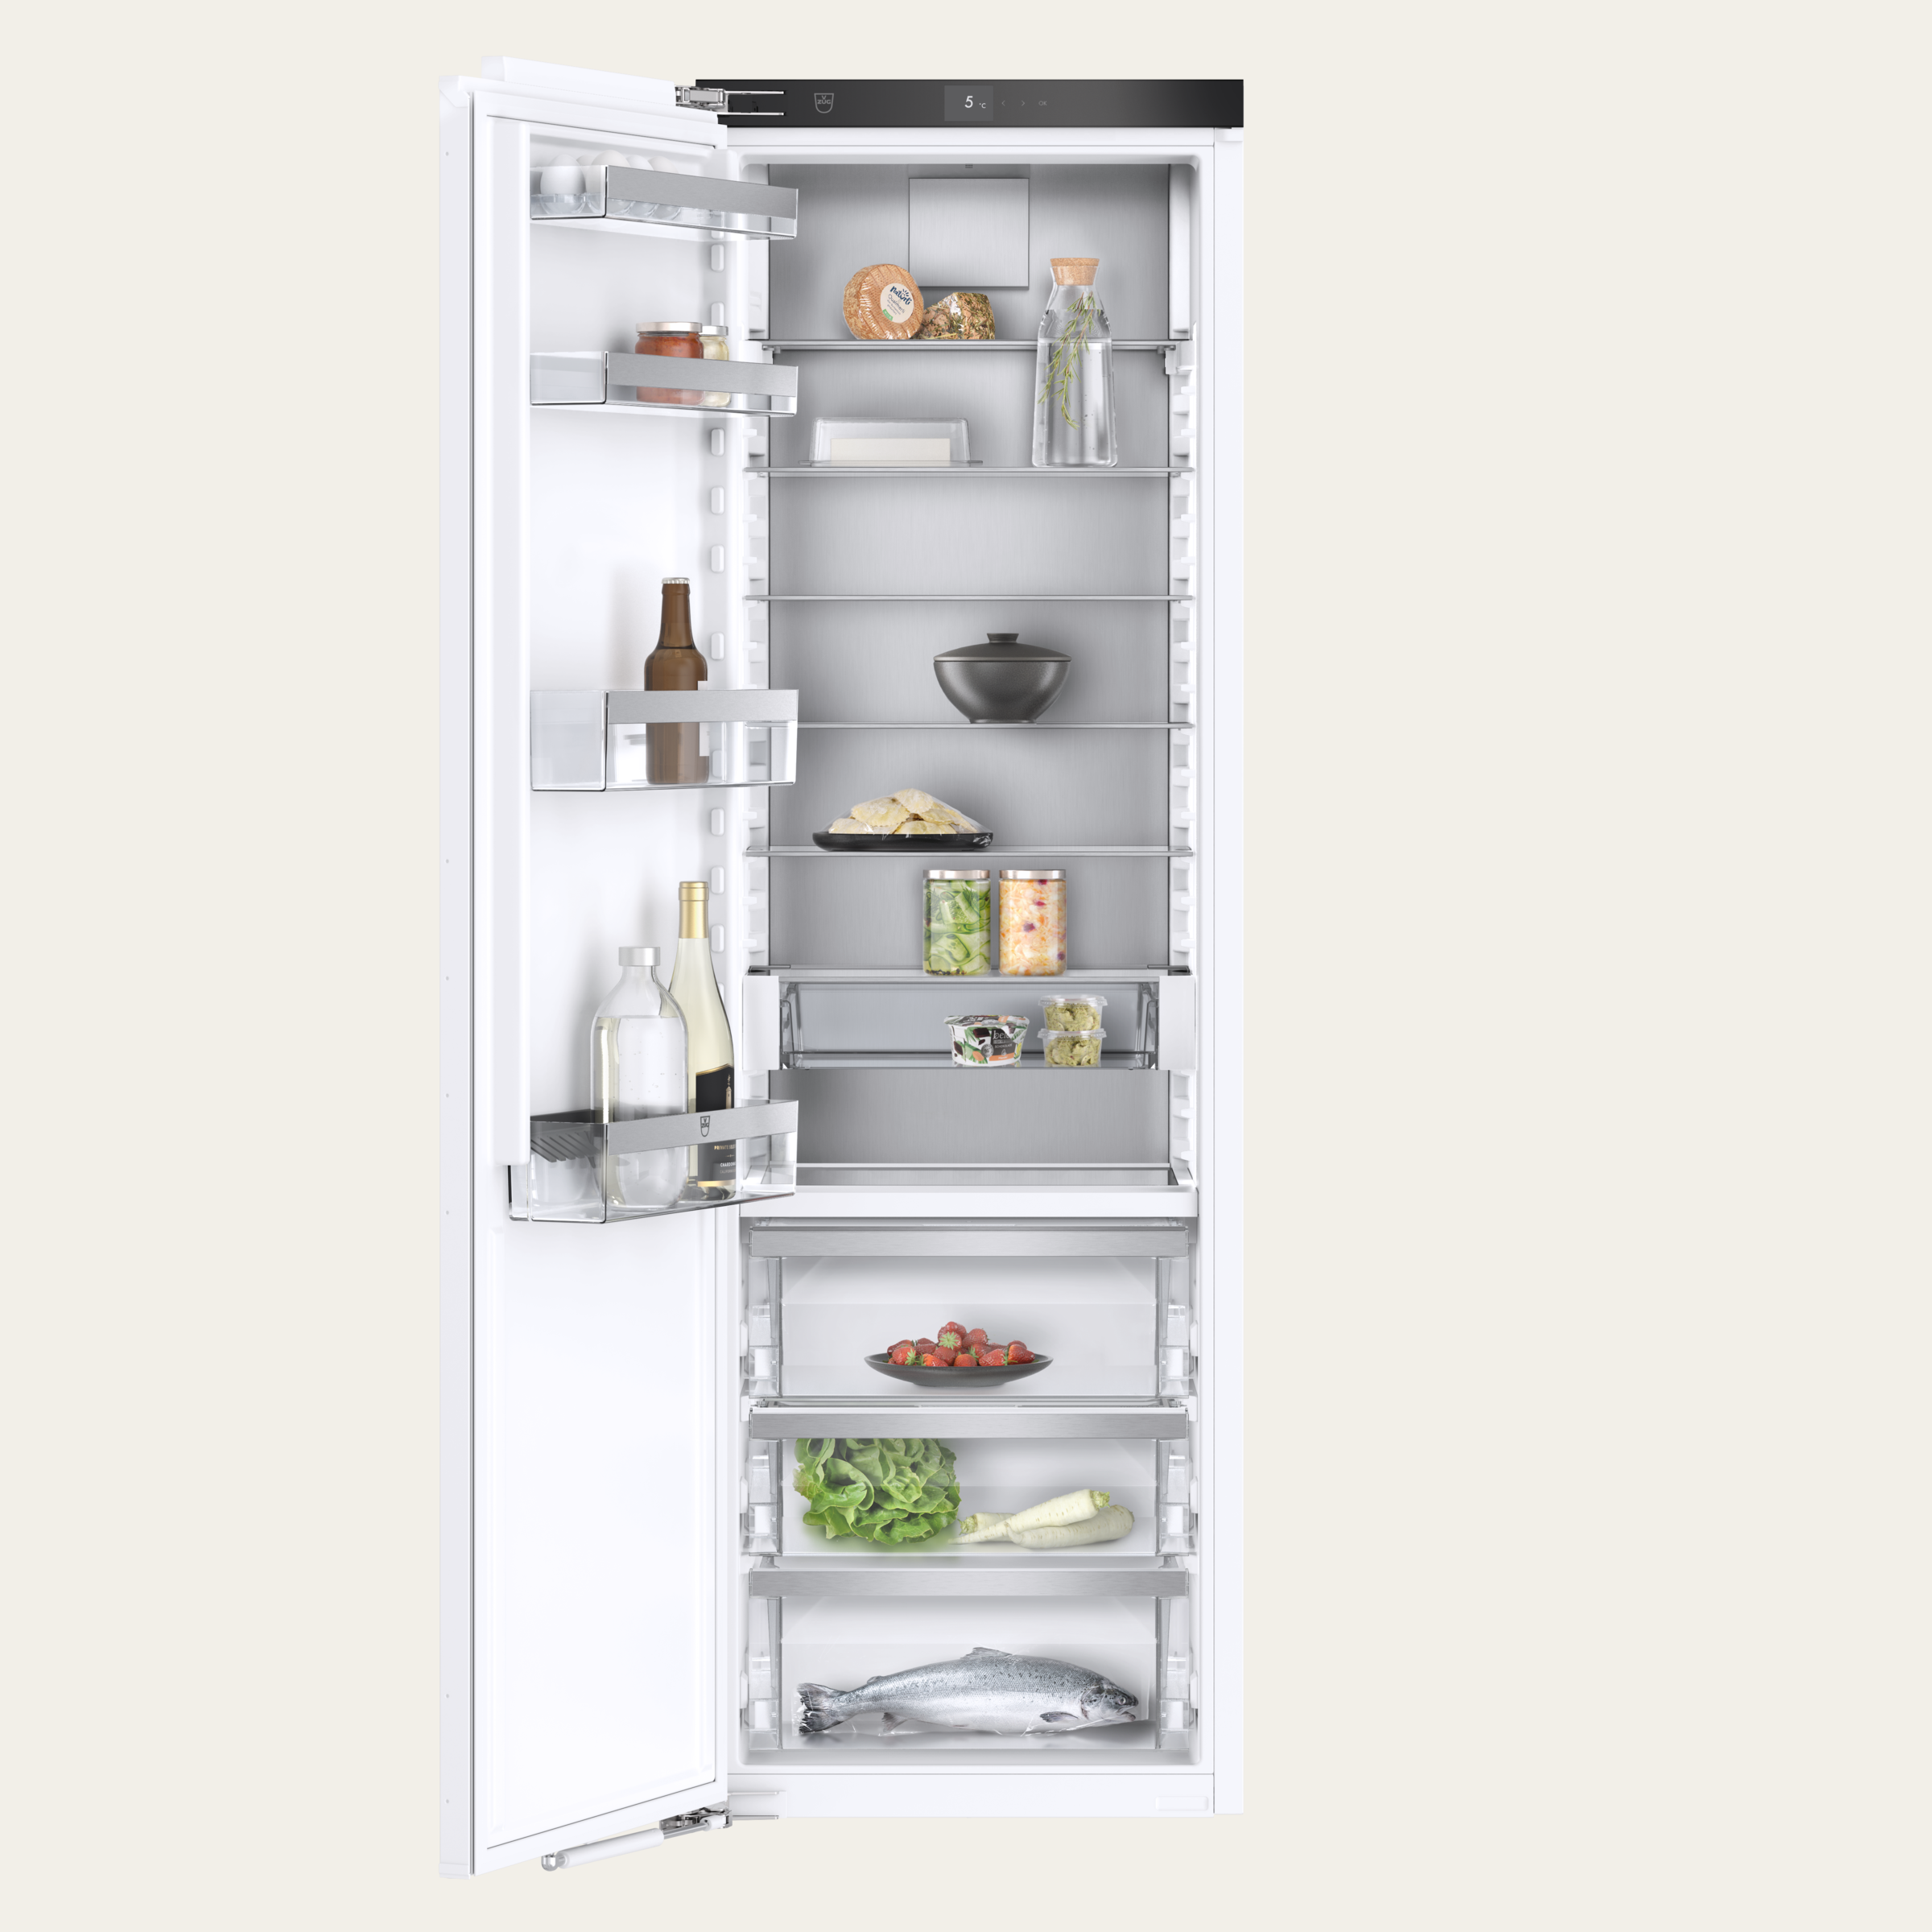 V-ZUG Refrigerator/freezer Cooler V4000 178K, Standard width: 60 cm, Standard height: 177.8 cm, Fully integratable, Door hinge: Left, Energy efficiency class: C, TouchControl